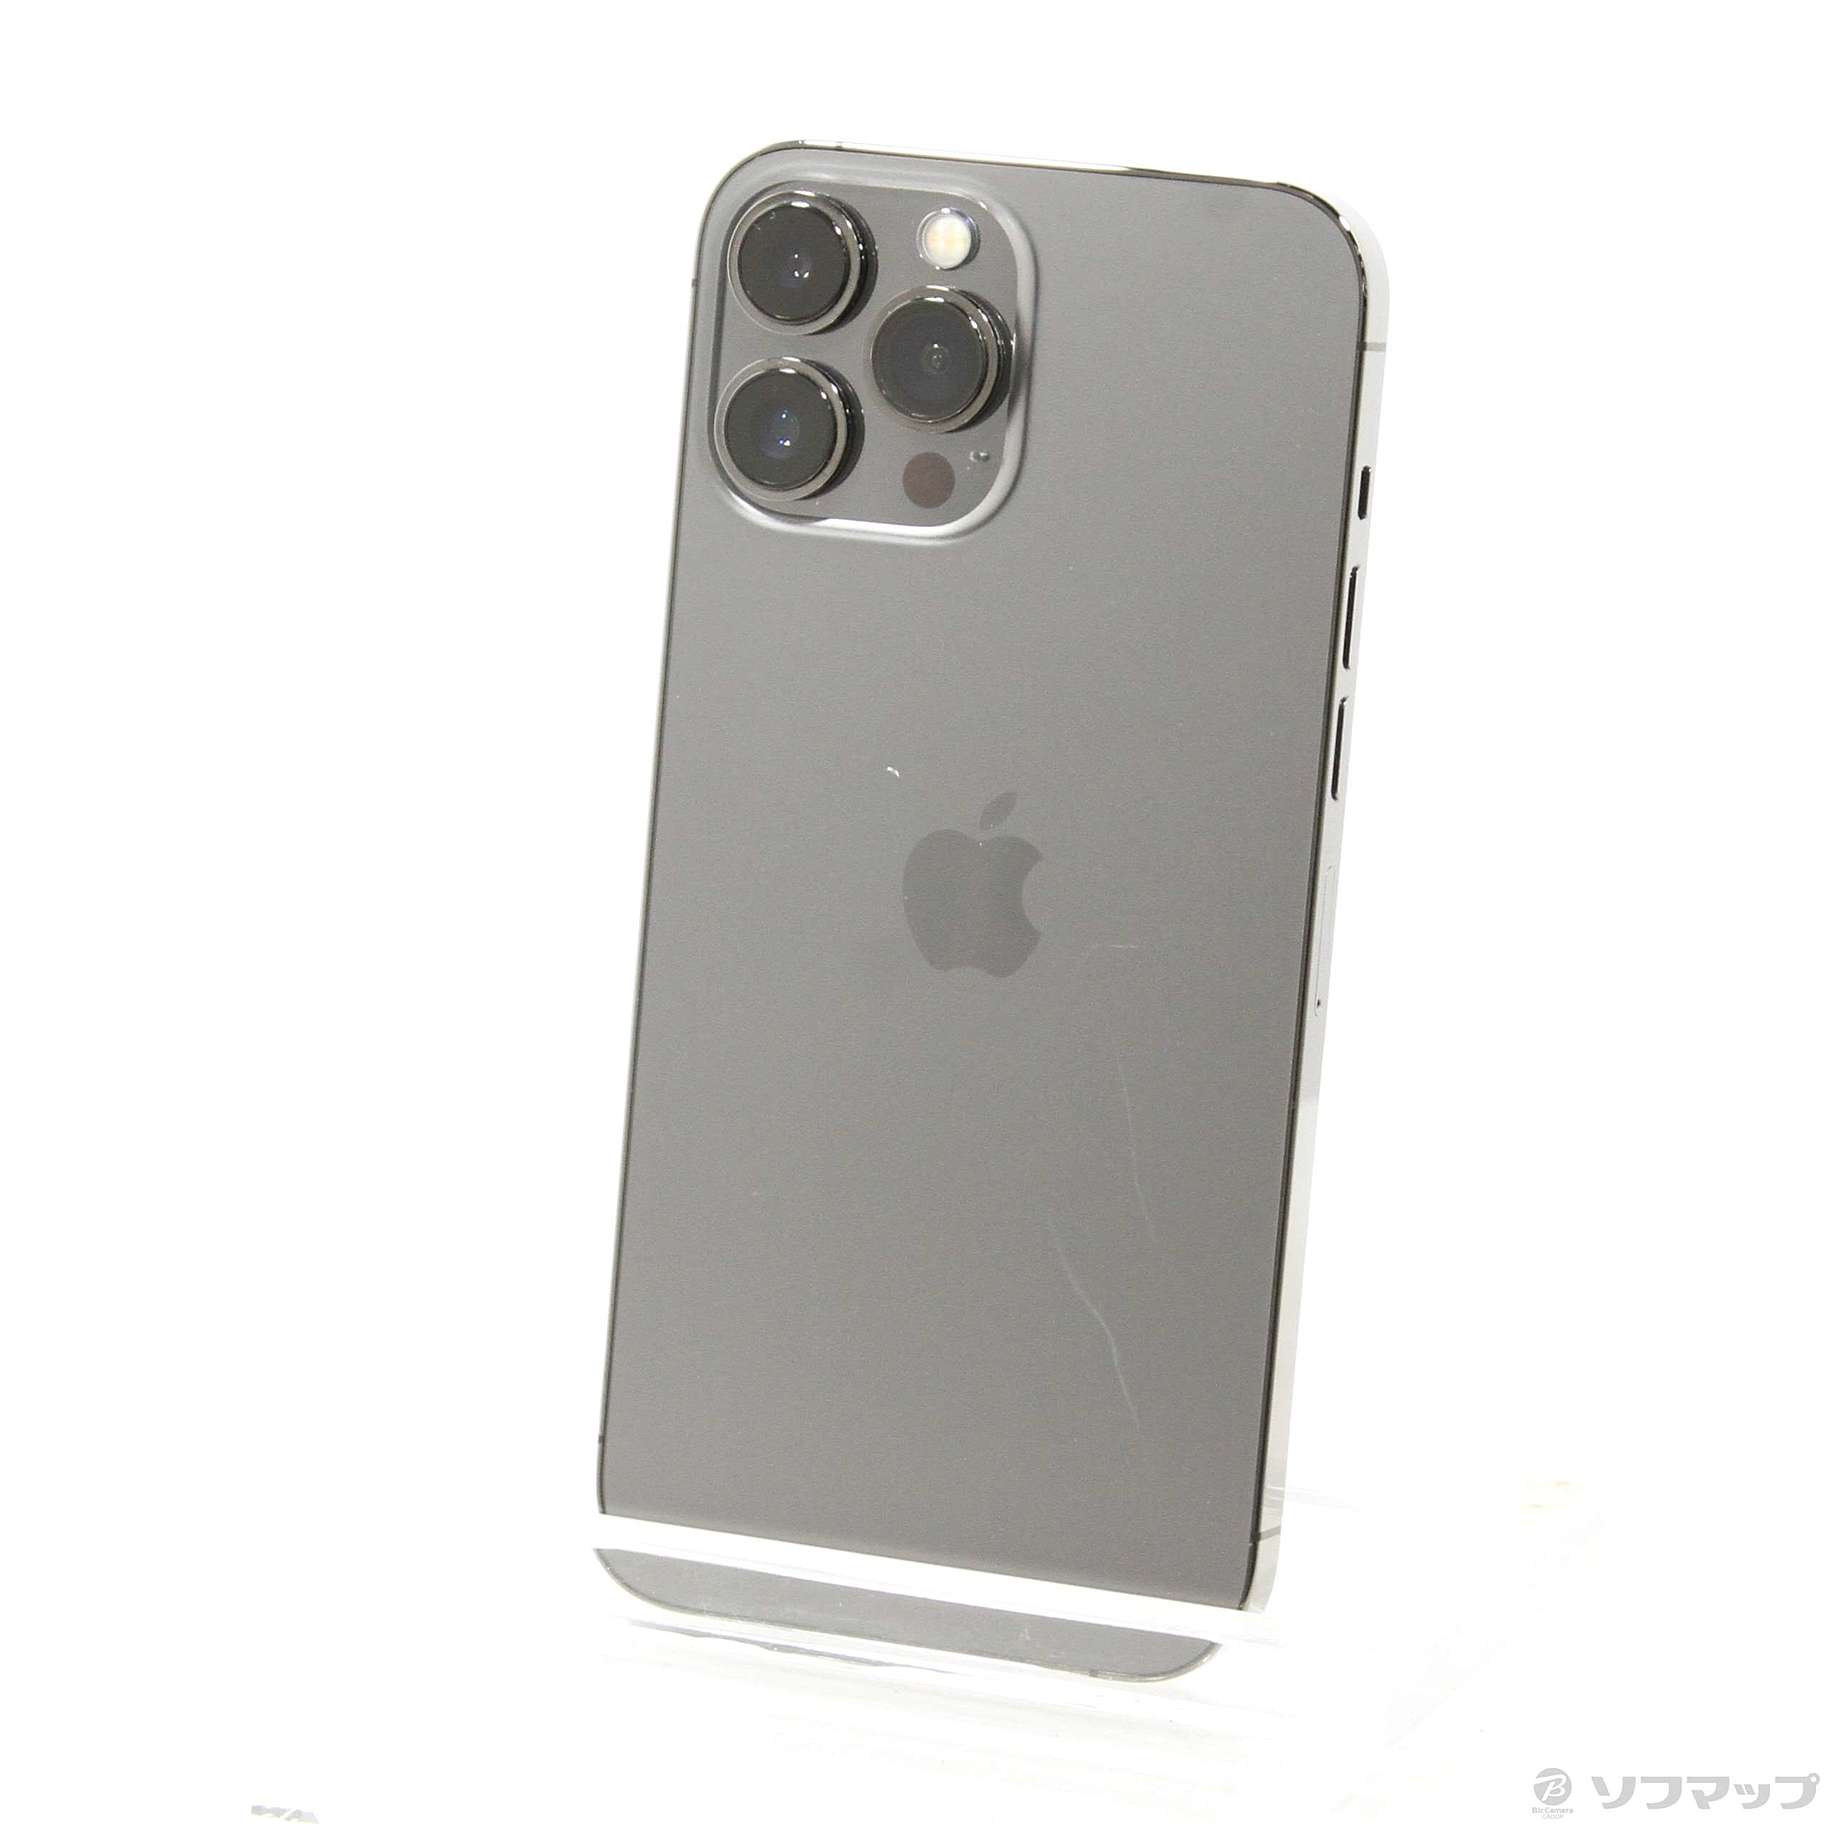 iPhone 13 Pro Max 128GB SIMフリー [グラファイト] 中古(白ロム)価格 